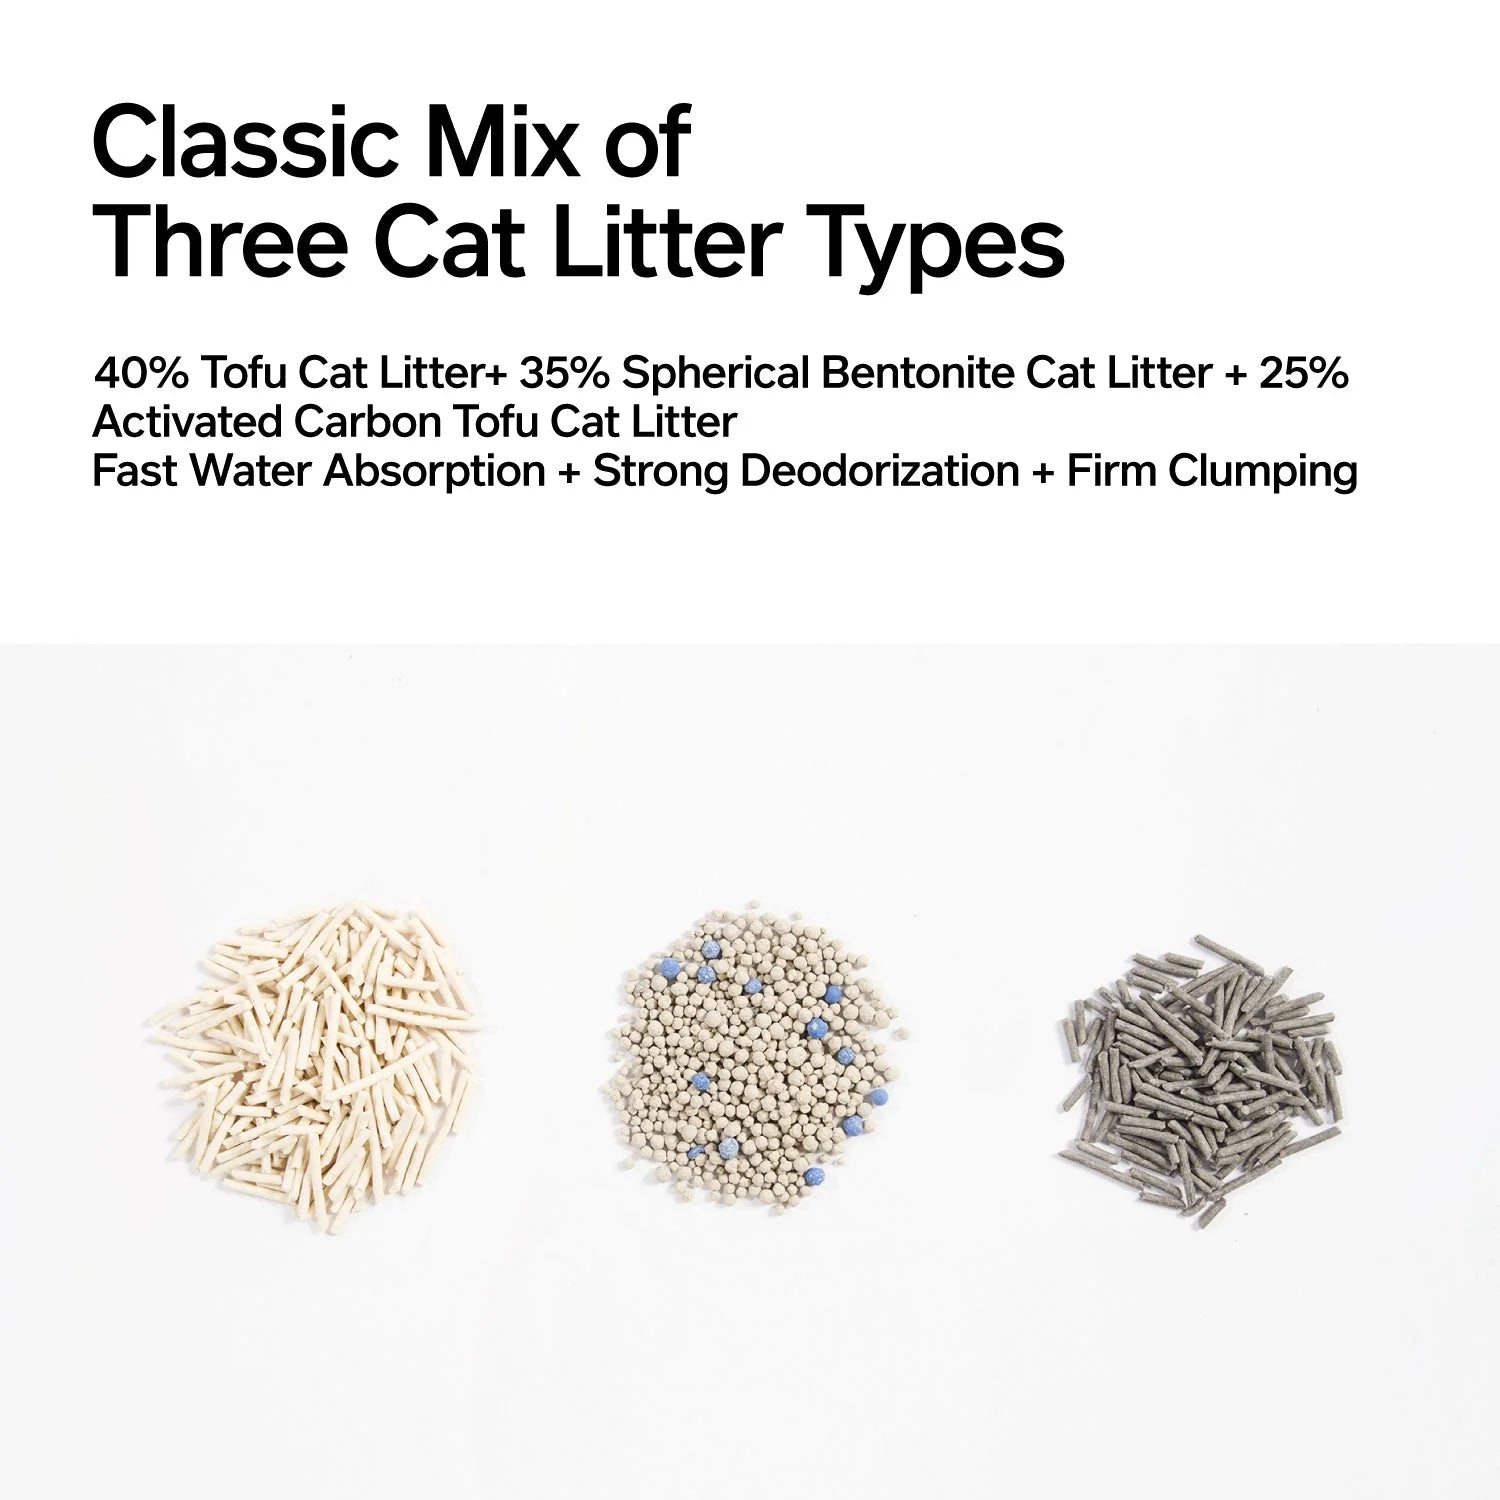 Pidan 3-in-1 Mixed Tofu Cat Litter Pail